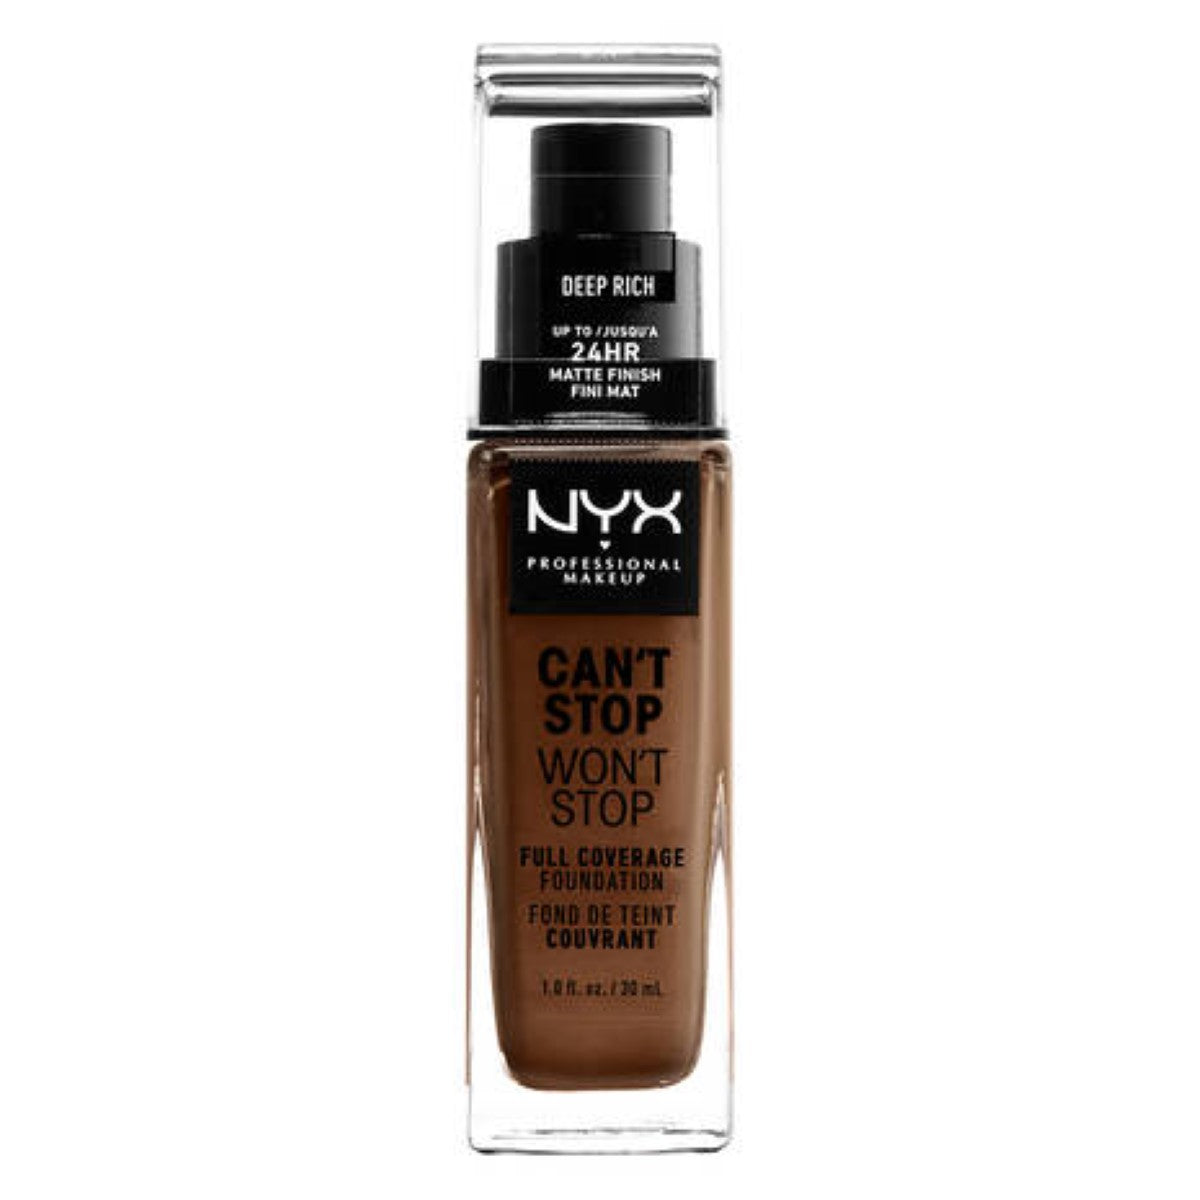 Crème Make-up Base NYX Can't Stop Won't Stop deep rich (30 ml) | NYX | Aylal Beauty